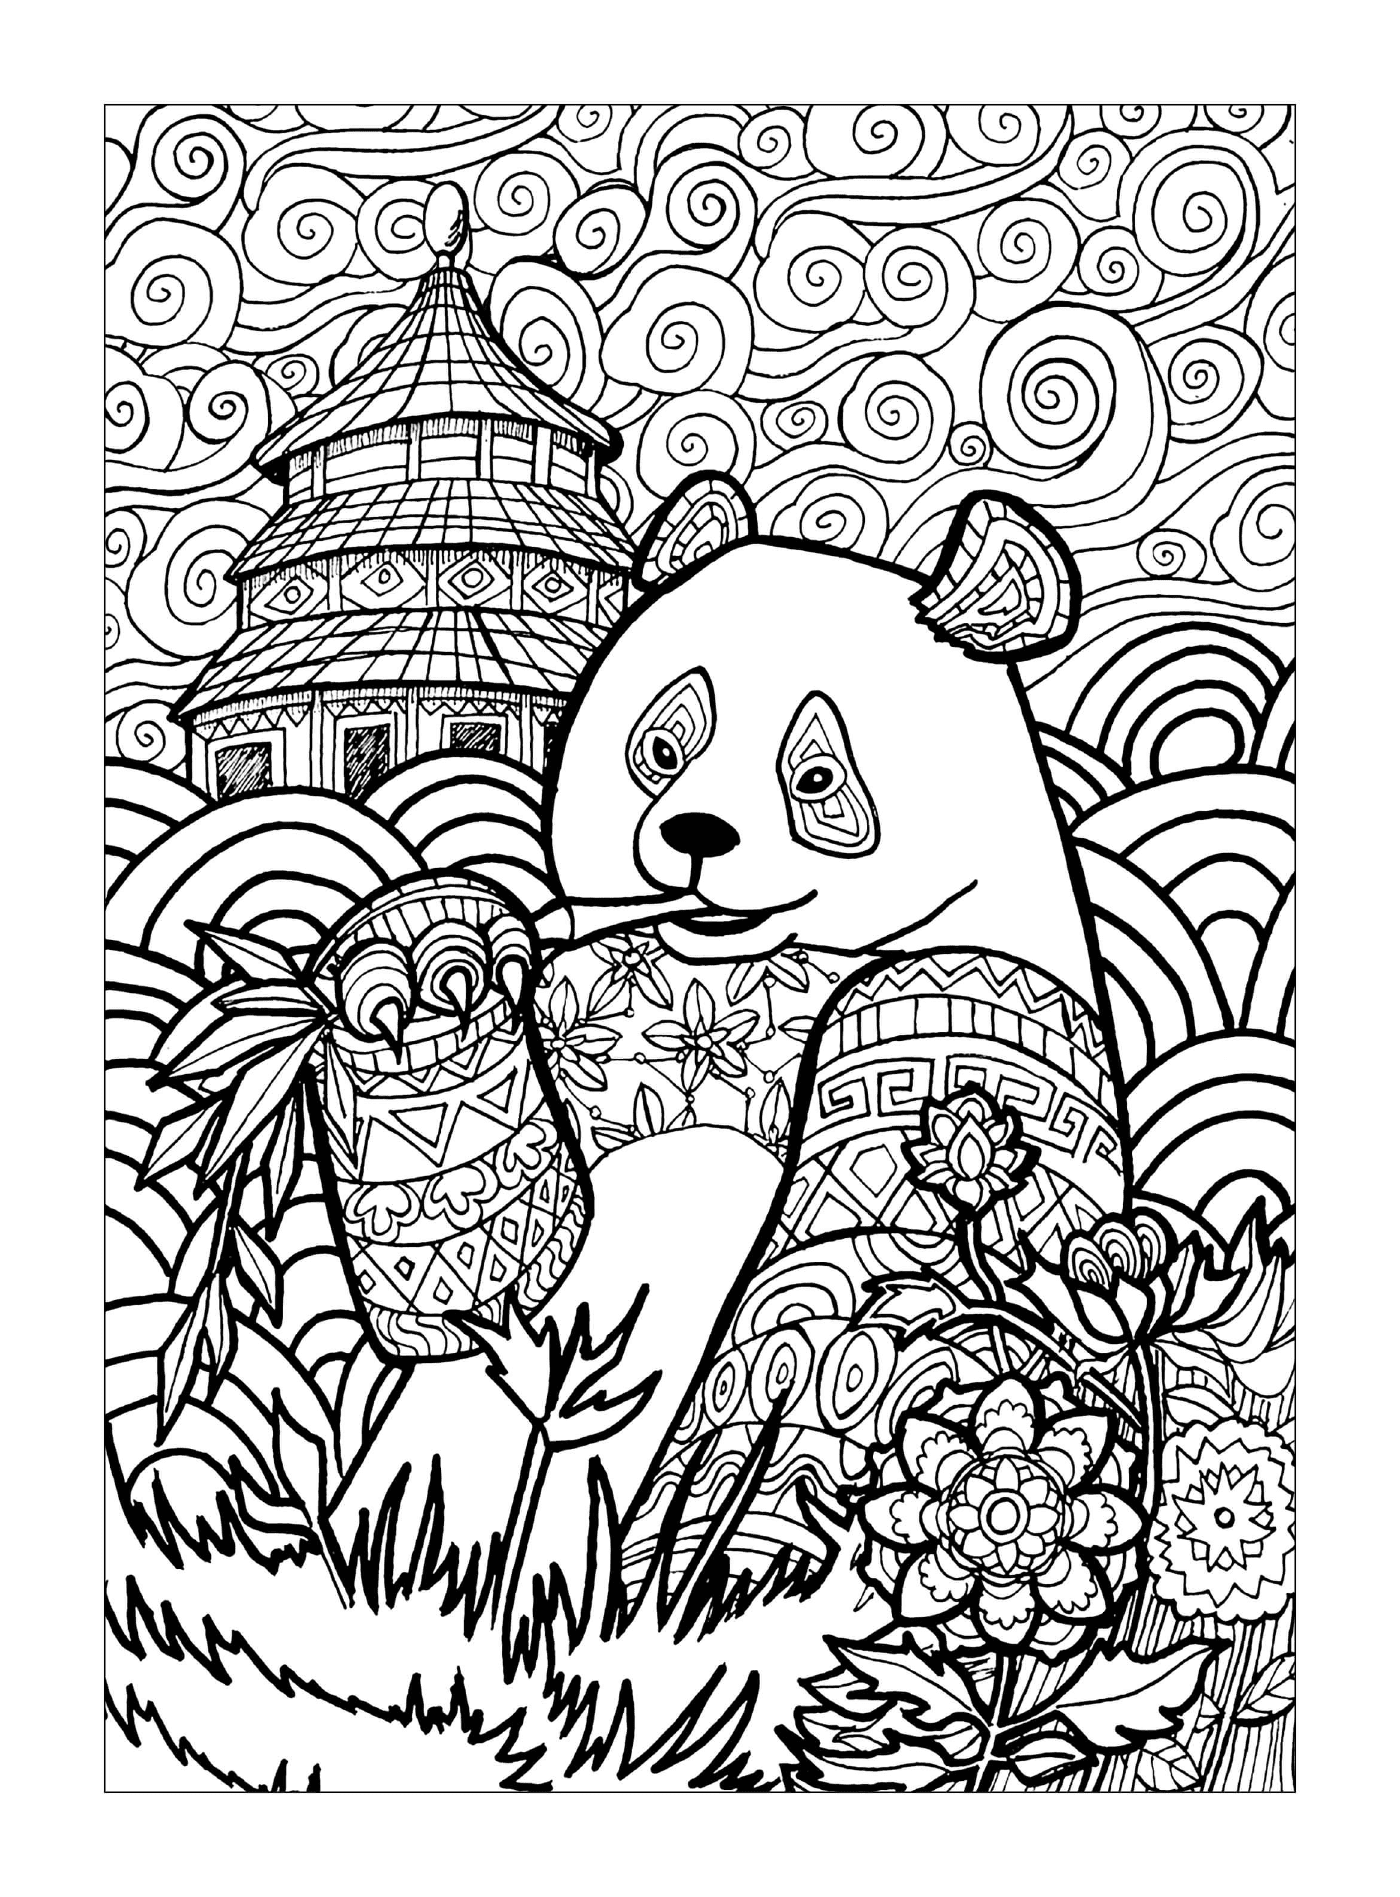  Panda and motifs in China, mandala animals 